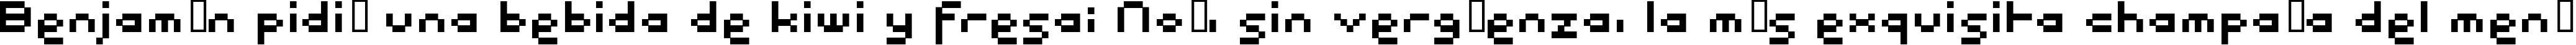 Пример написания шрифтом Pixel текста на испанском